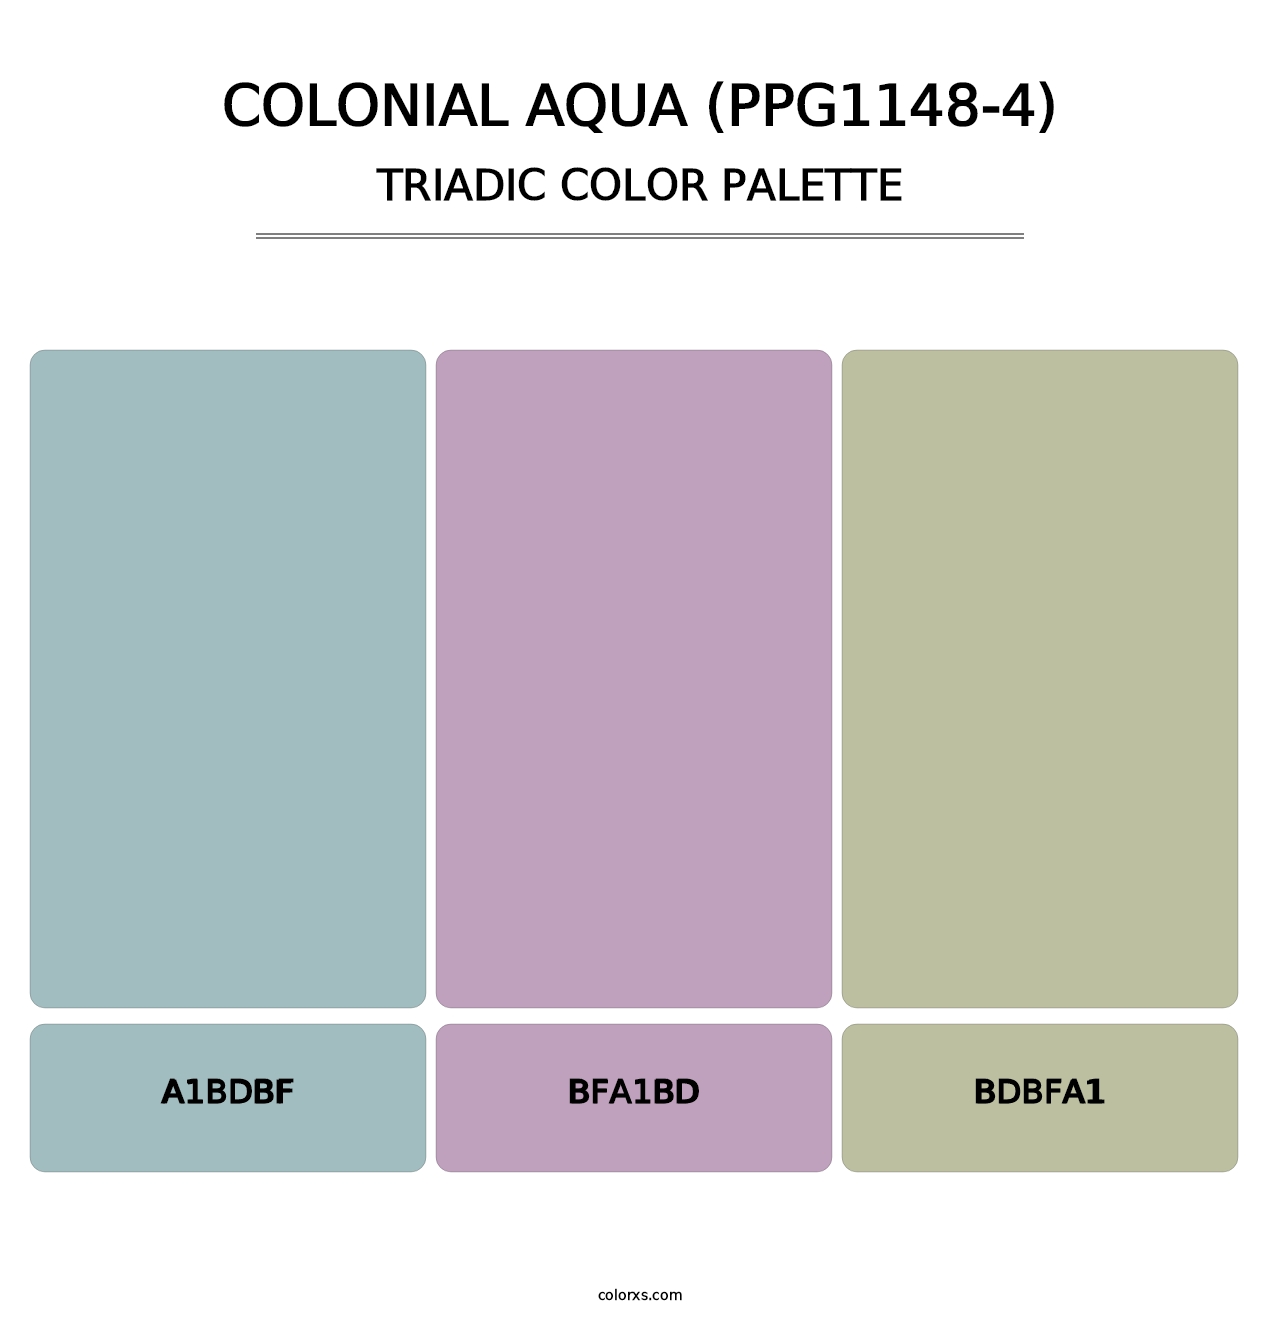 Colonial Aqua (PPG1148-4) - Triadic Color Palette